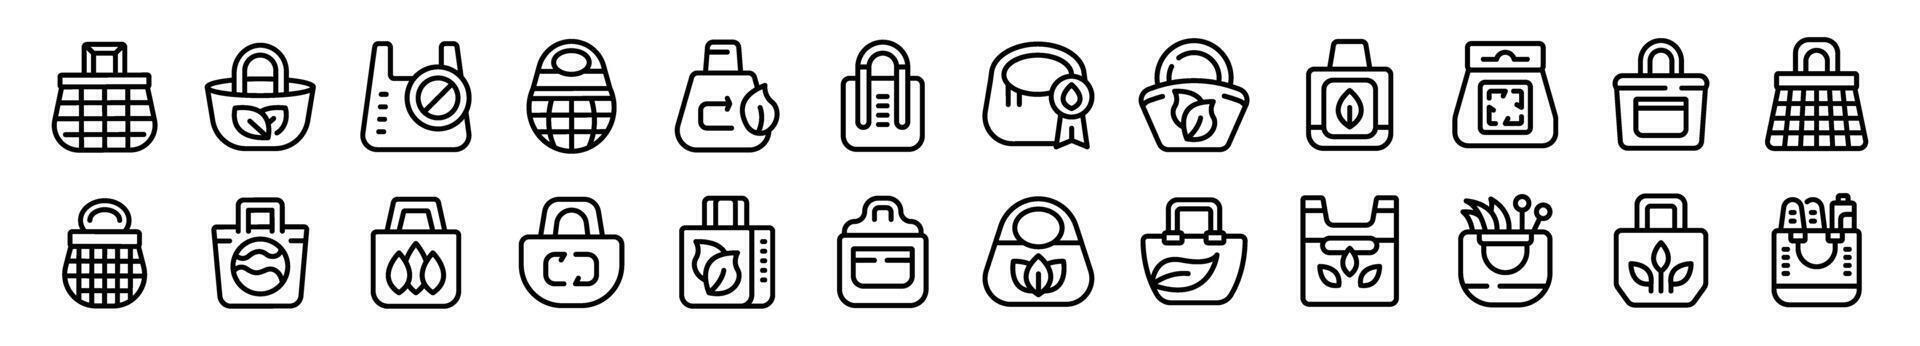 Reusable market shopper icons set outline vector. Tote bag fabric vector